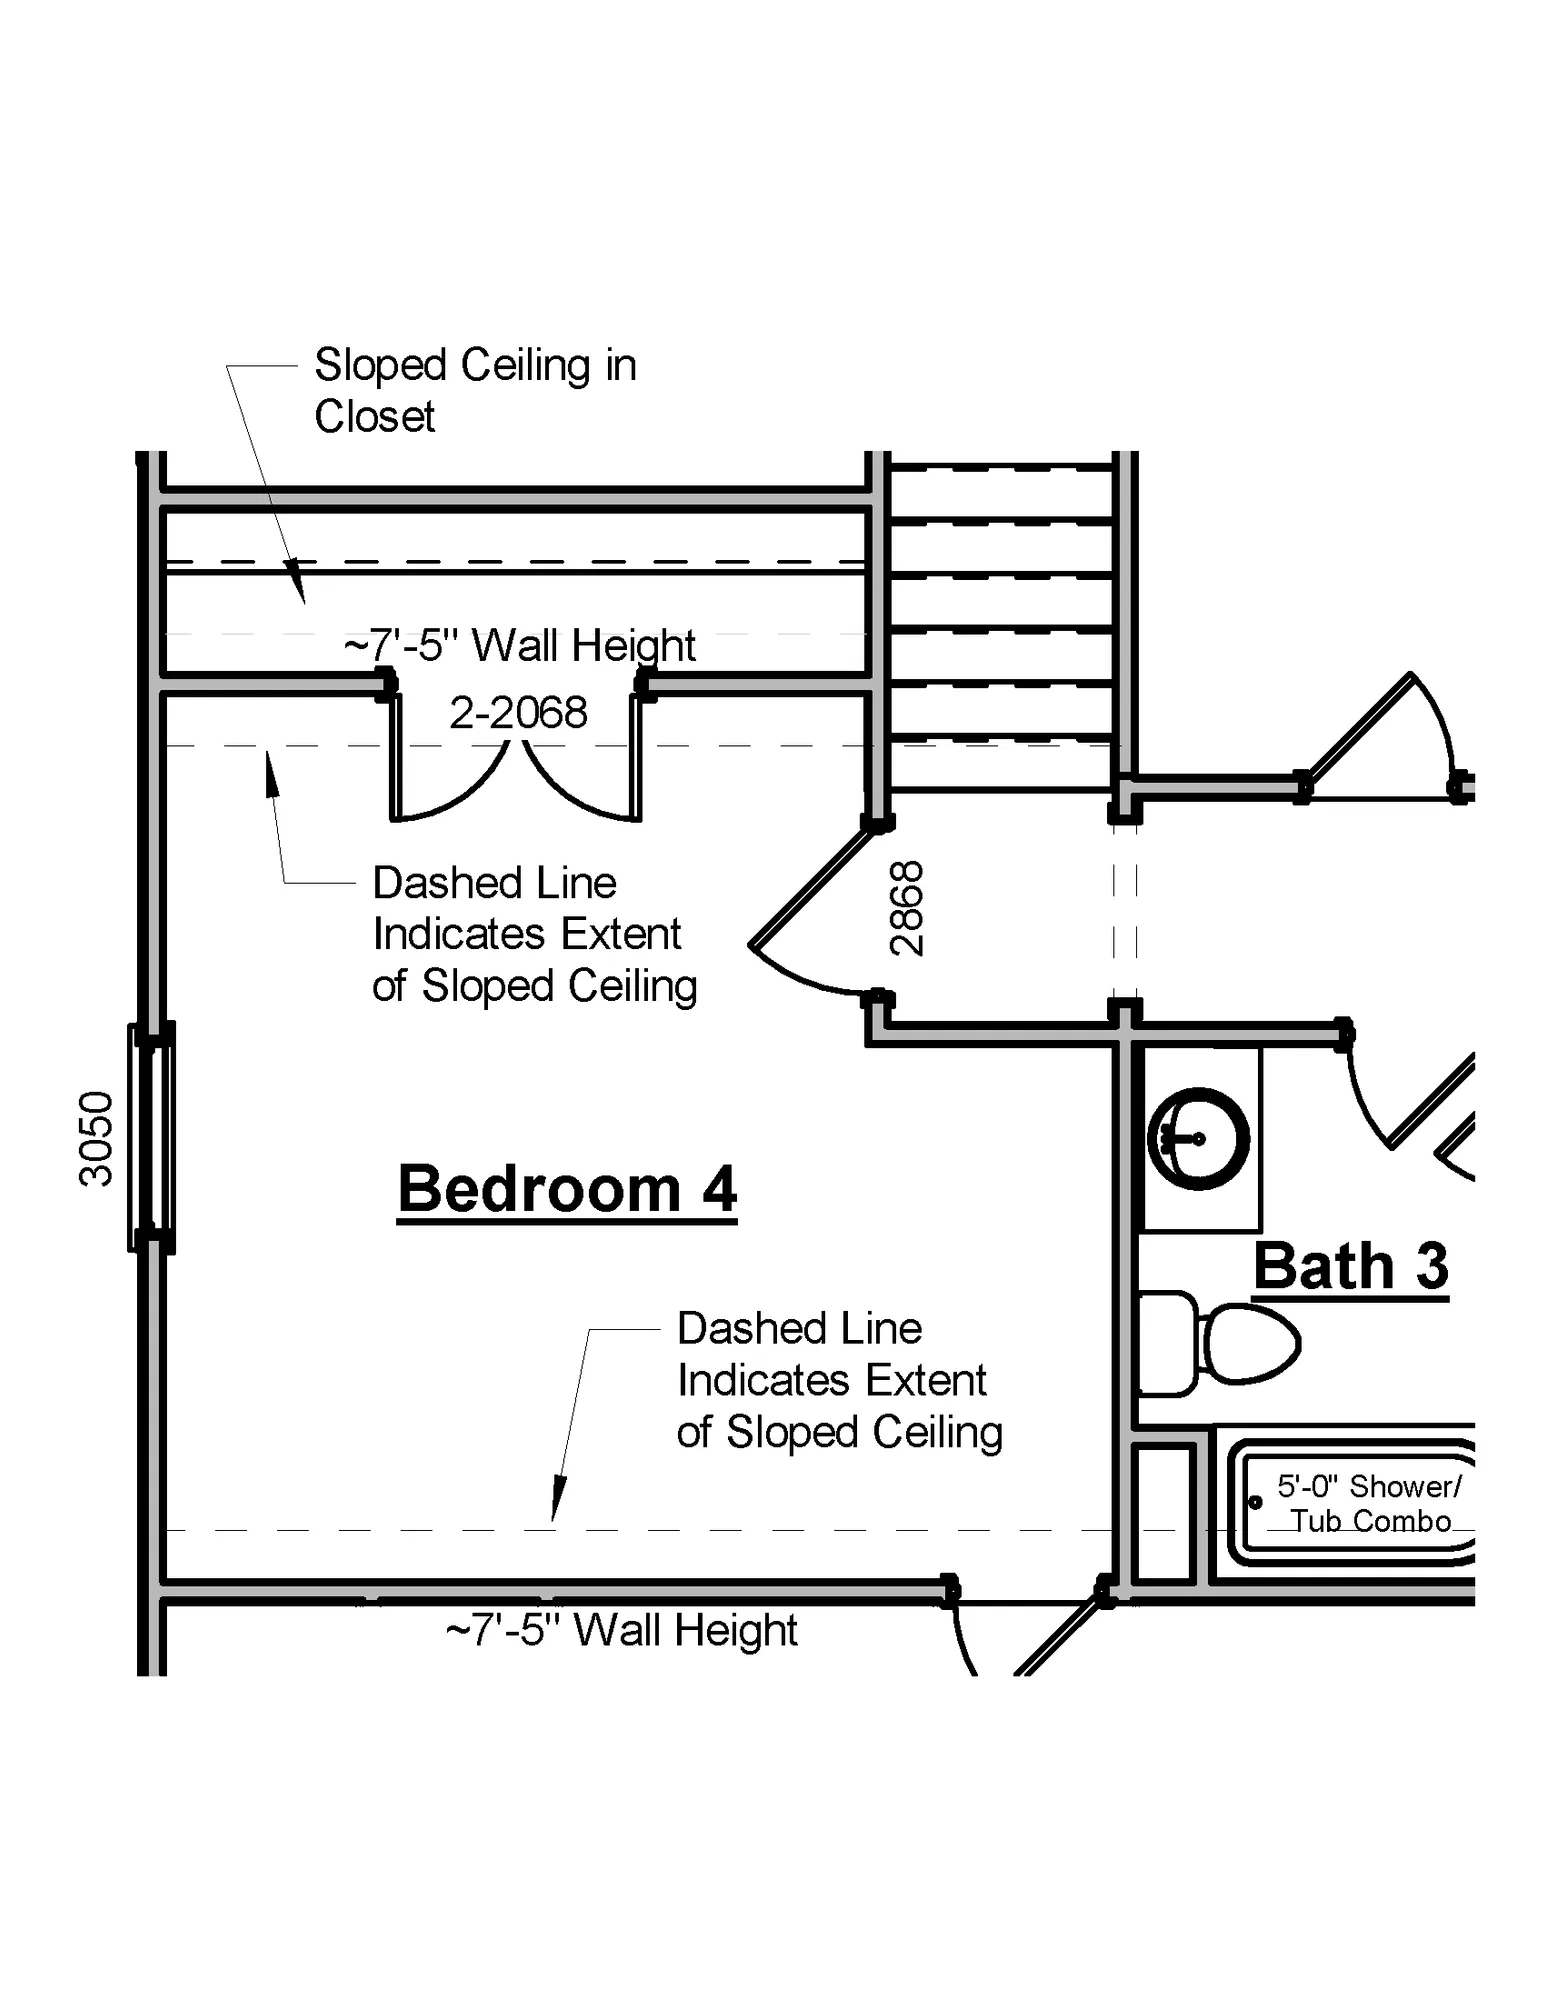 Bedroom 4 Option - undefined